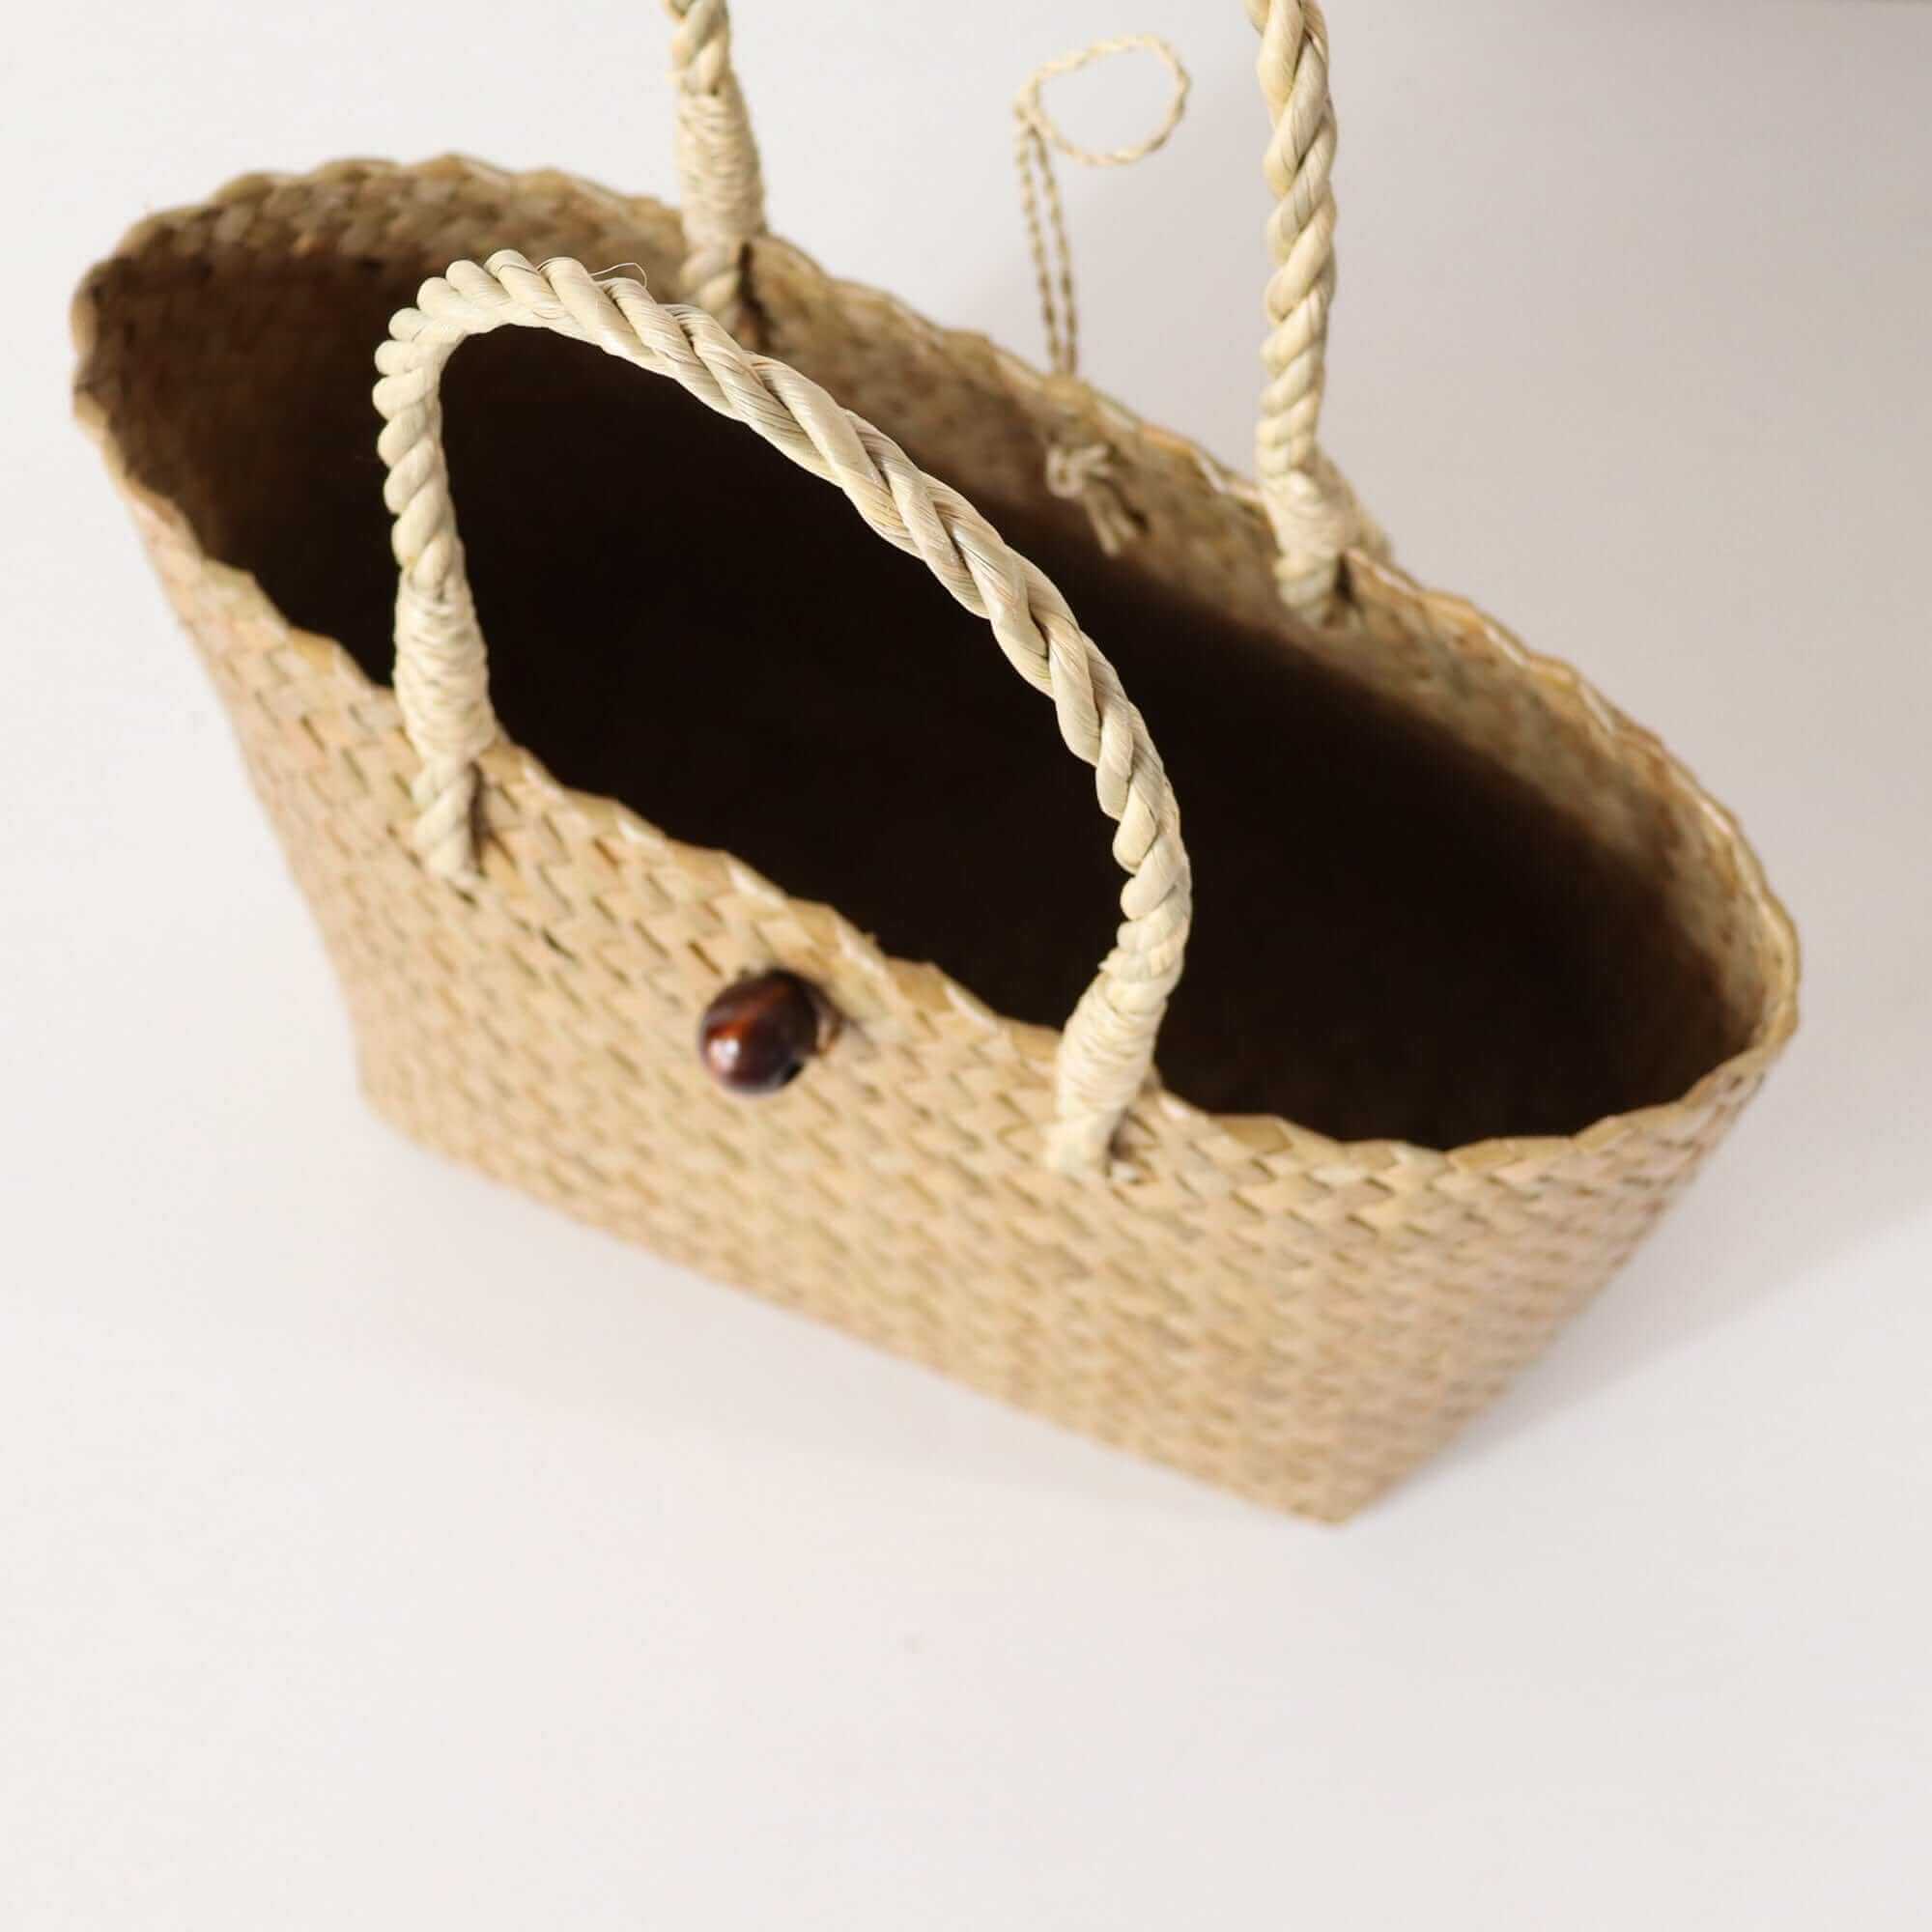 AMARA - Straw Basket Bag